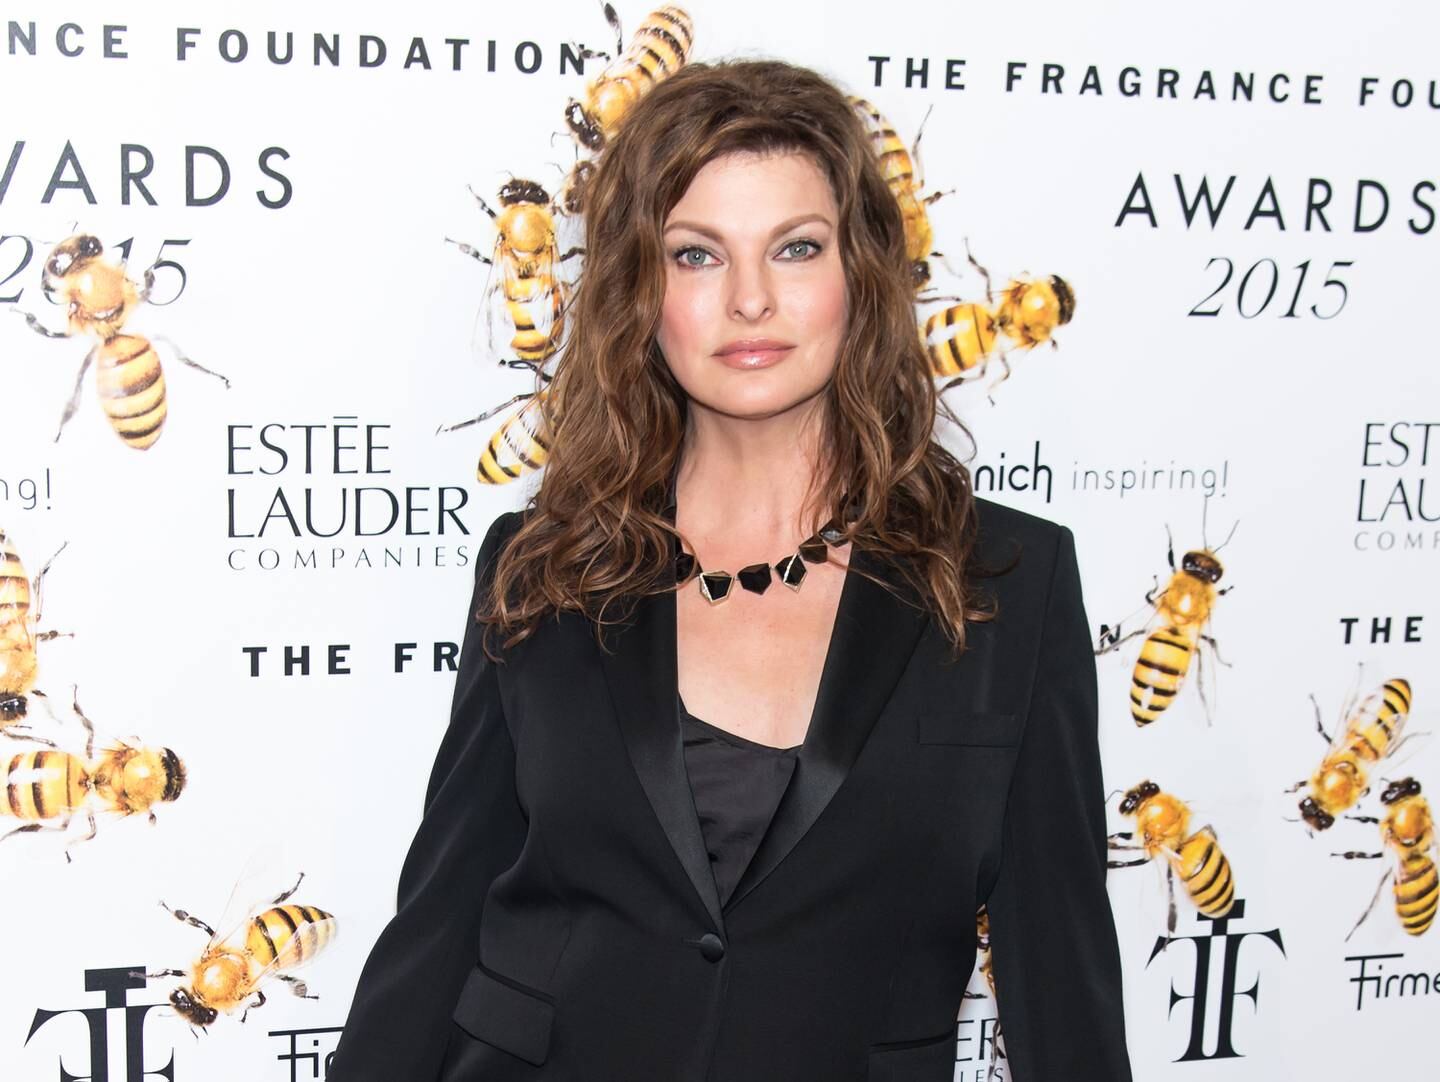 Linda Evangelista at the 2015 Fragrance Foundation Awards on June 17, 2015 in New York City.